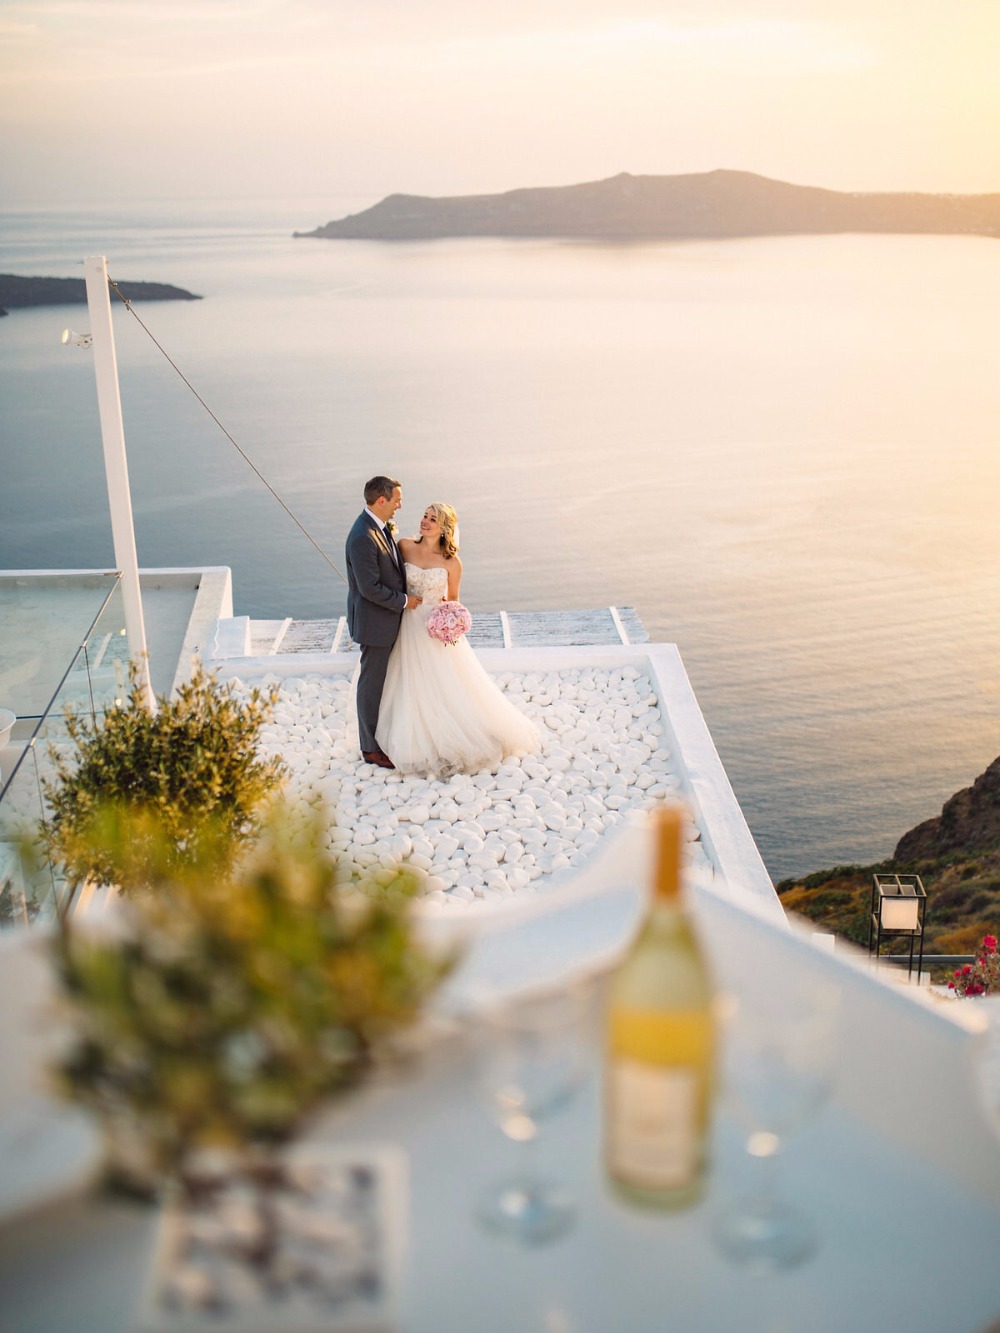 Get married in Santorini